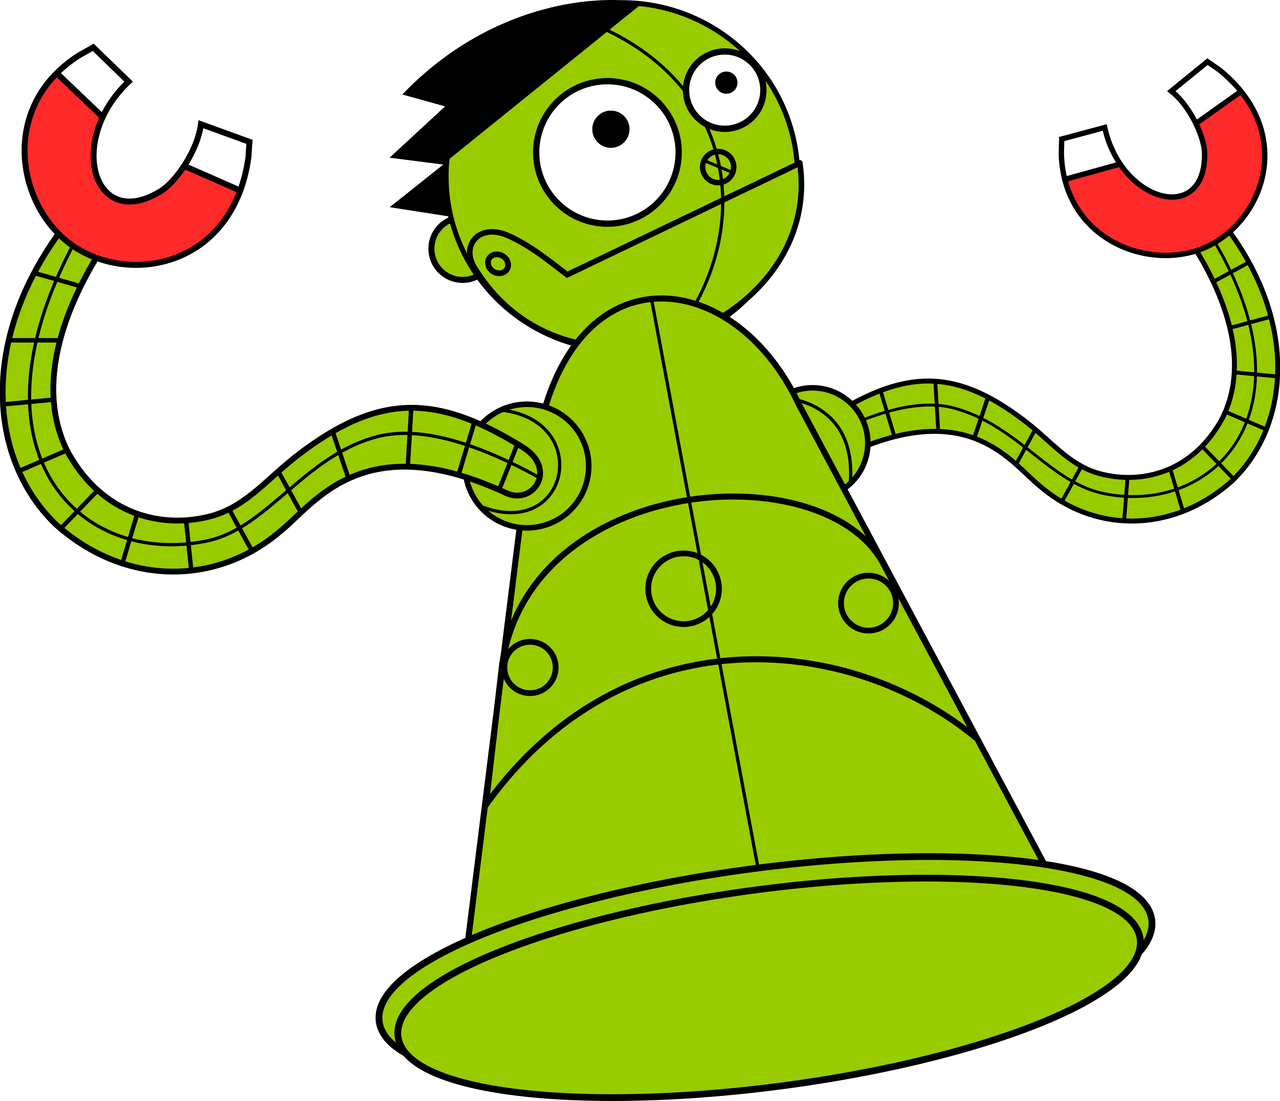 PBS Kids Digital Art - Dash as a Robot (1999) by Only3Arts on DeviantArt